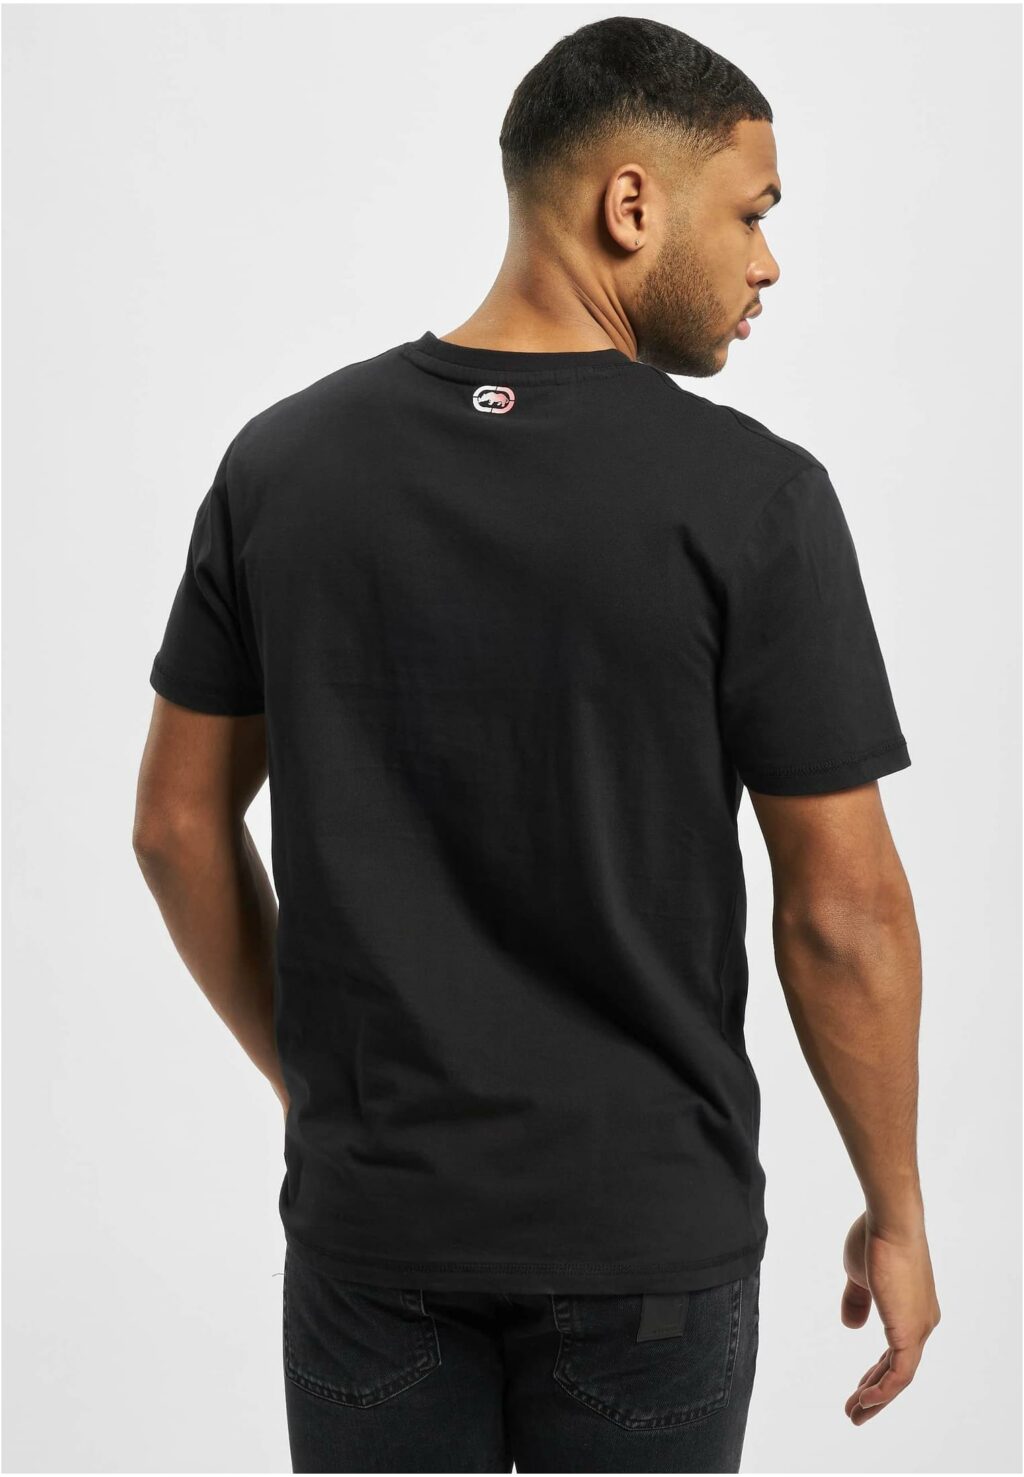 Gunbower T-Shirt black ECKOTS1111